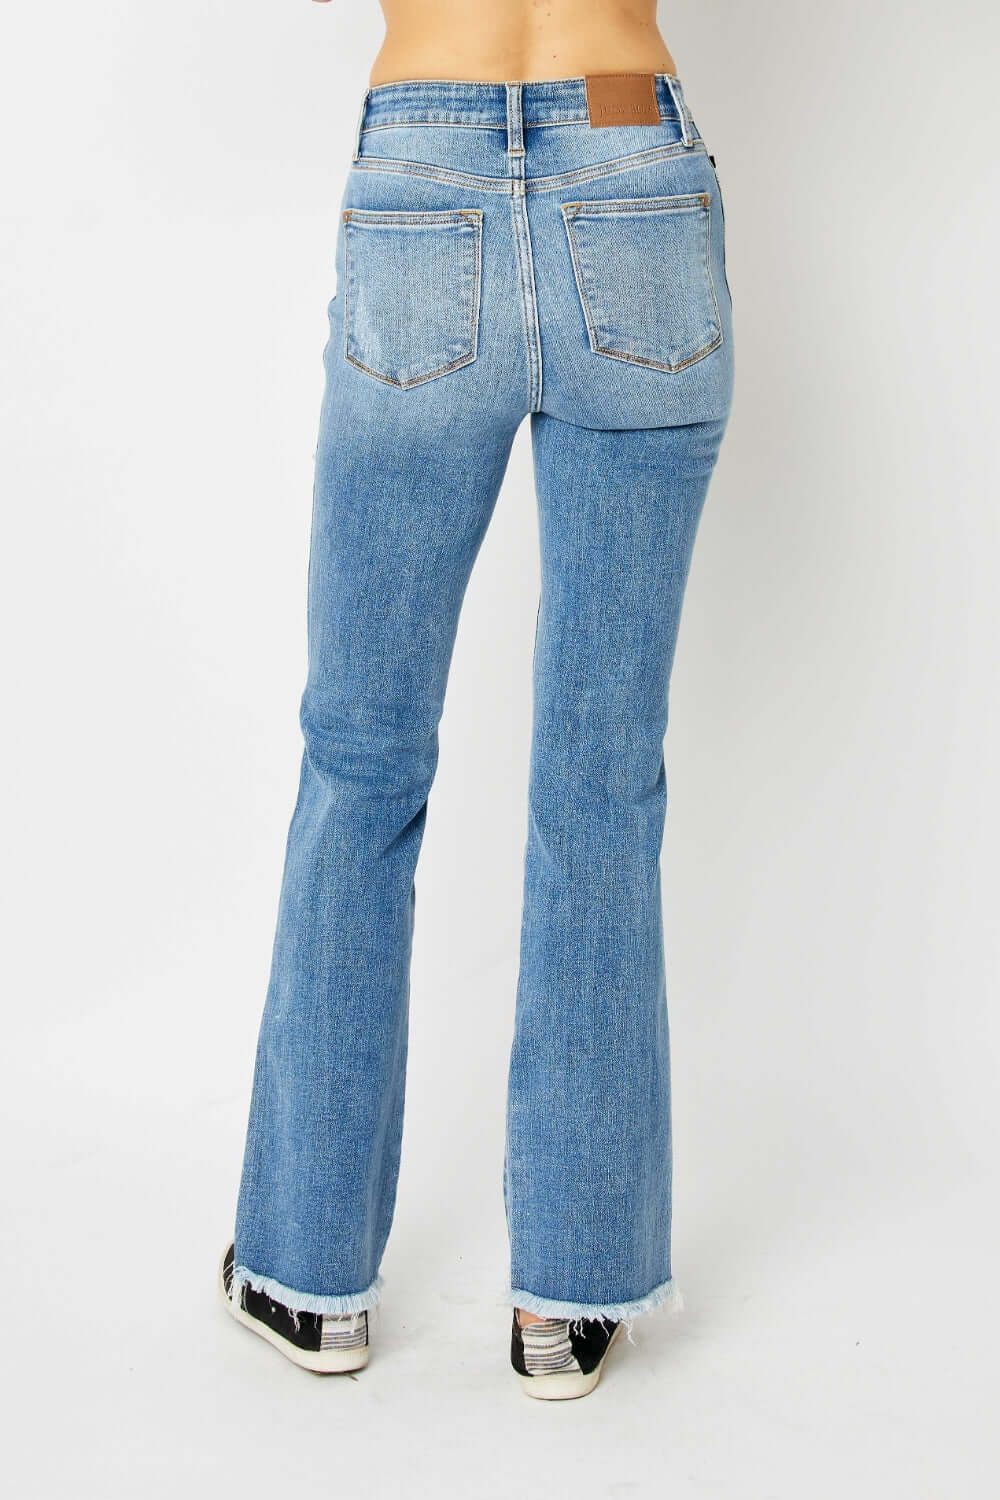 Judy Blue Full Size Distressed Raw Hem Bootcut Jeans - Samslivos